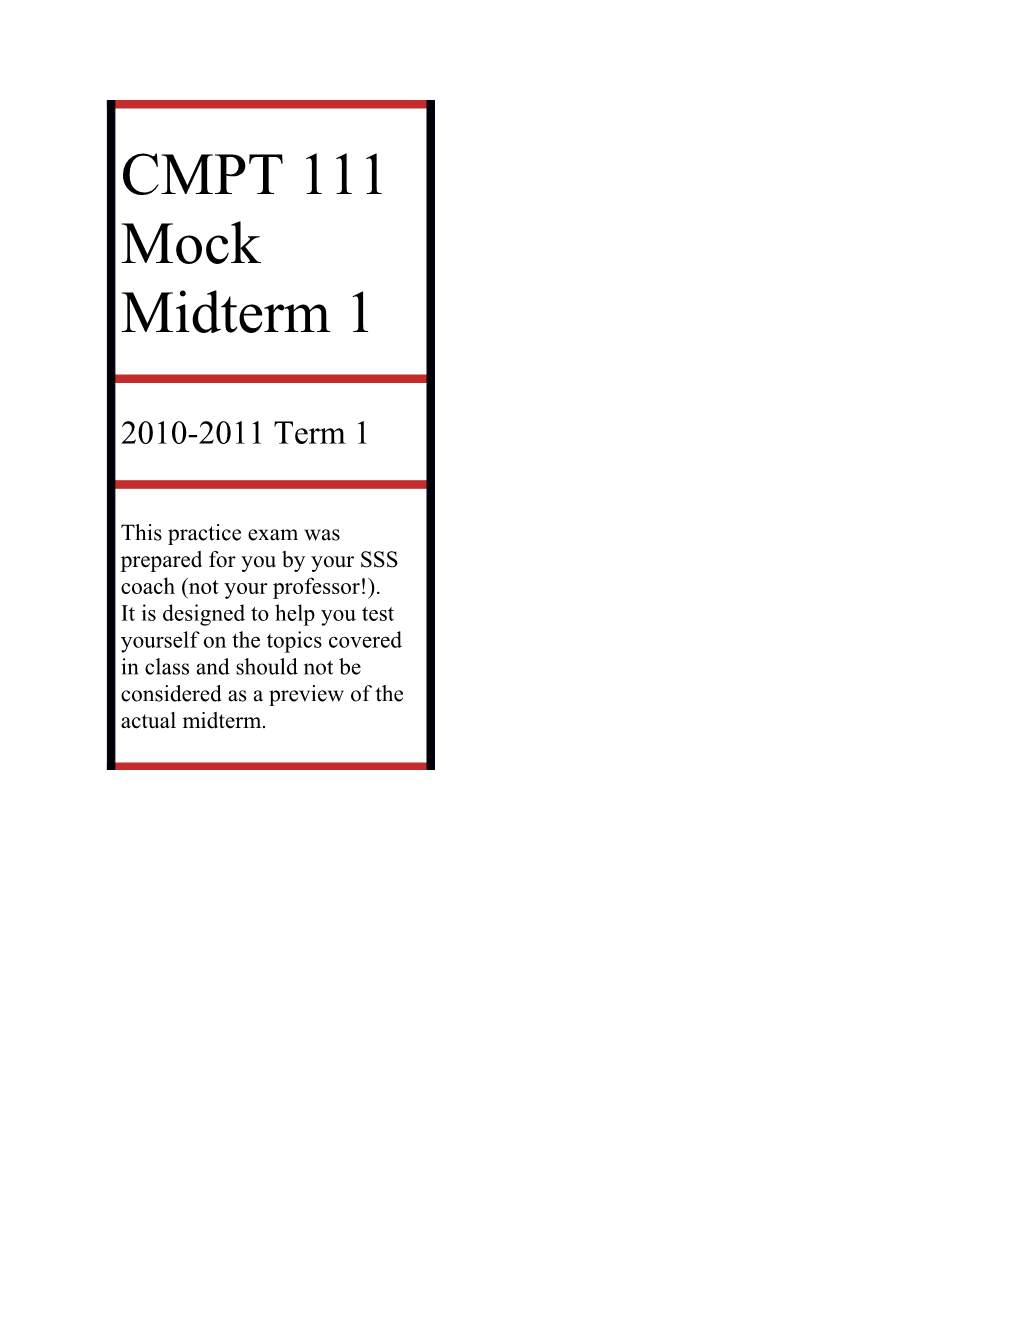 CMPT 111 Mock Midterm 1